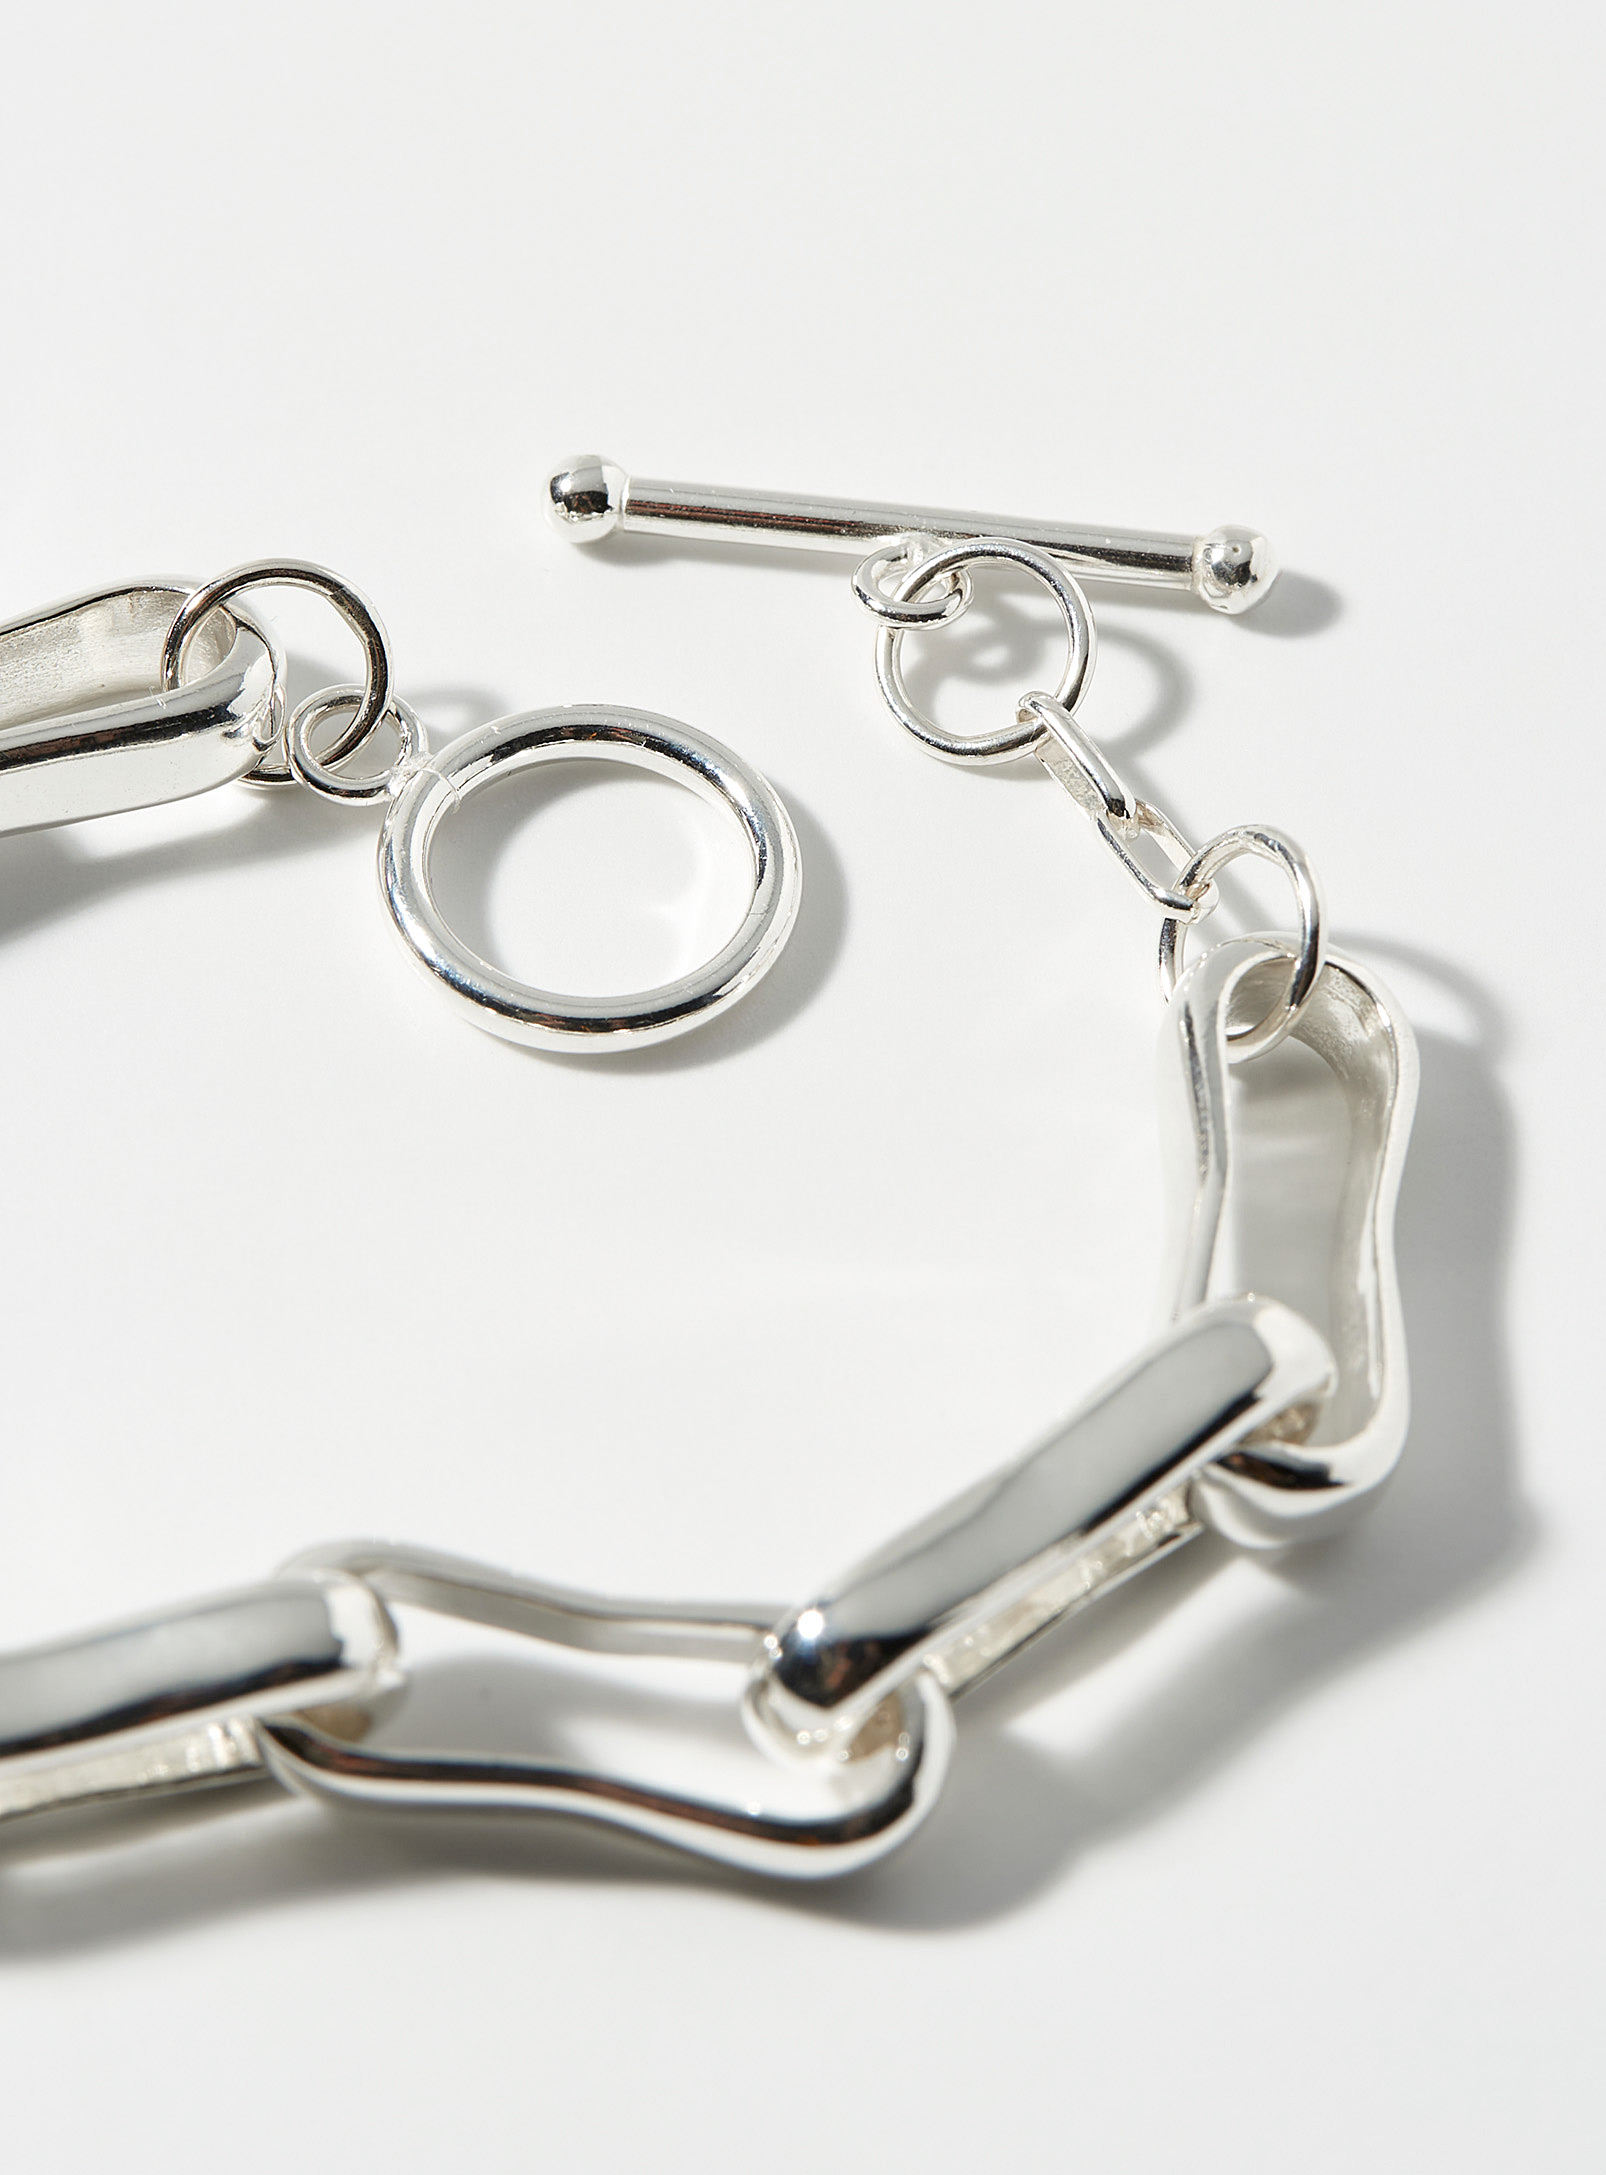 Paul Edward - Le bracelet argent sterling ovale